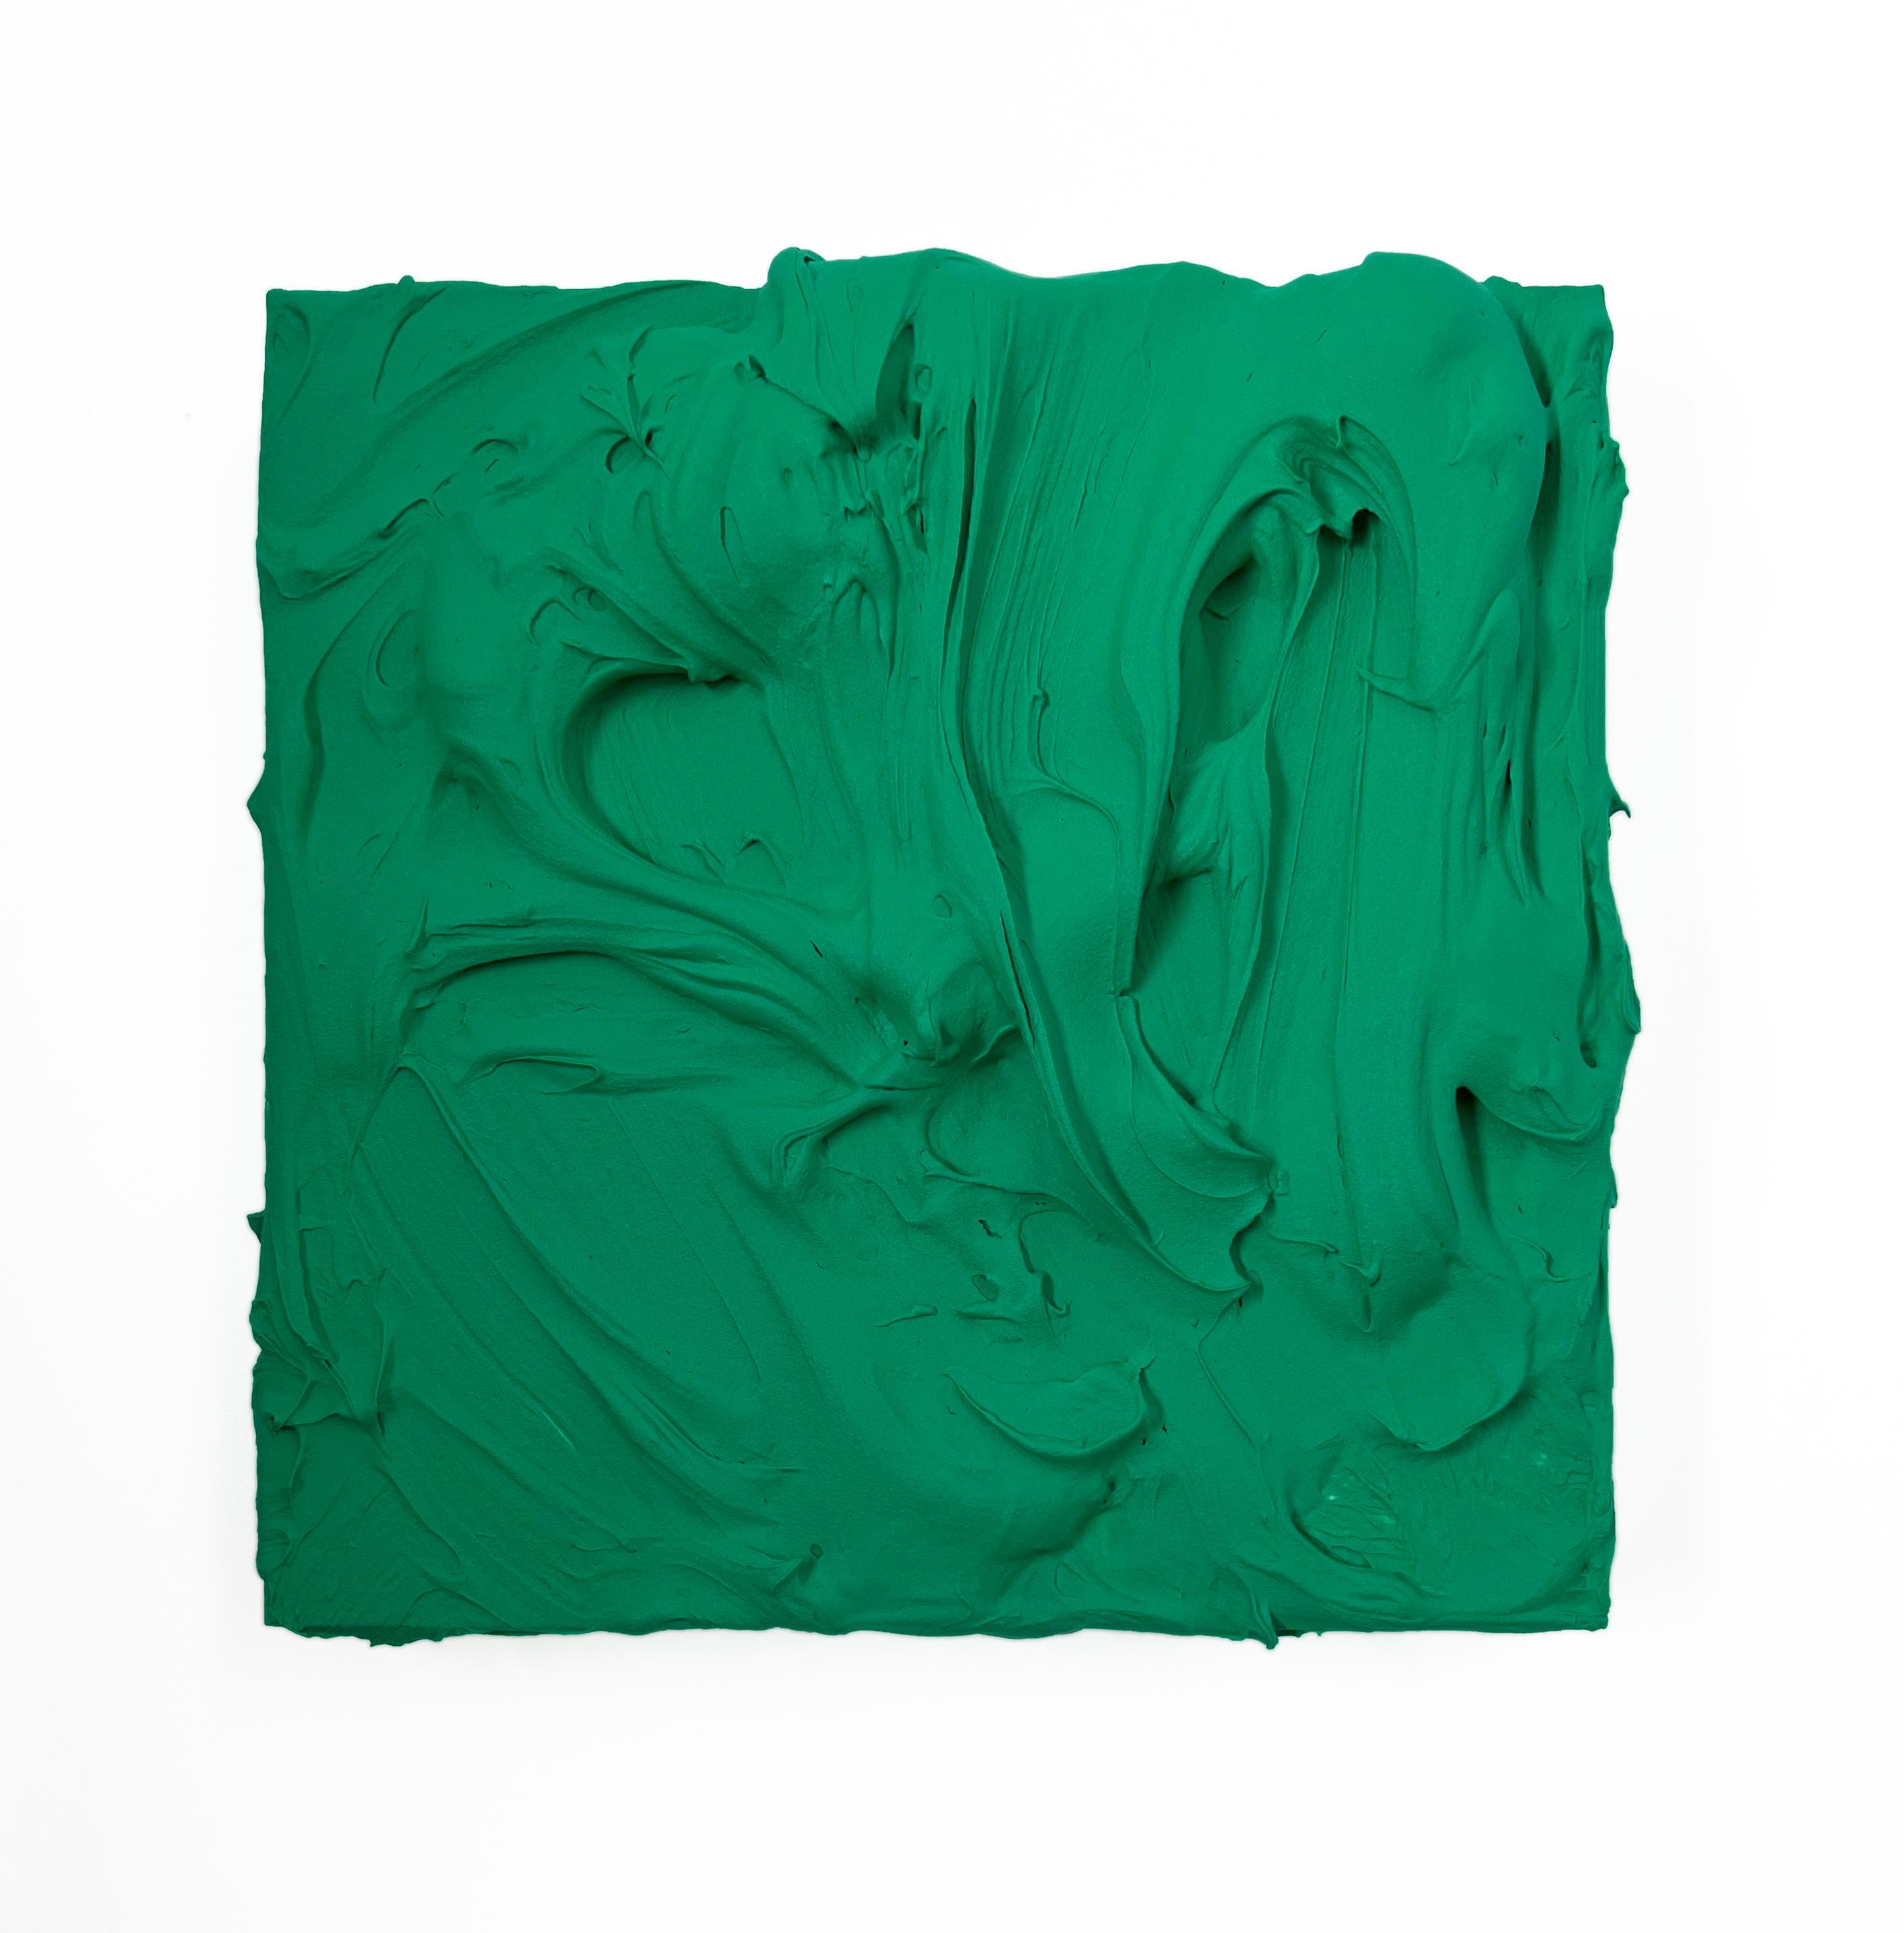 Chloe Hedden Abstract Painting – Smaragdgrüner Exzess (pastose, dicke Malerei, monochromes, quadratisches Pop-Art-Design)